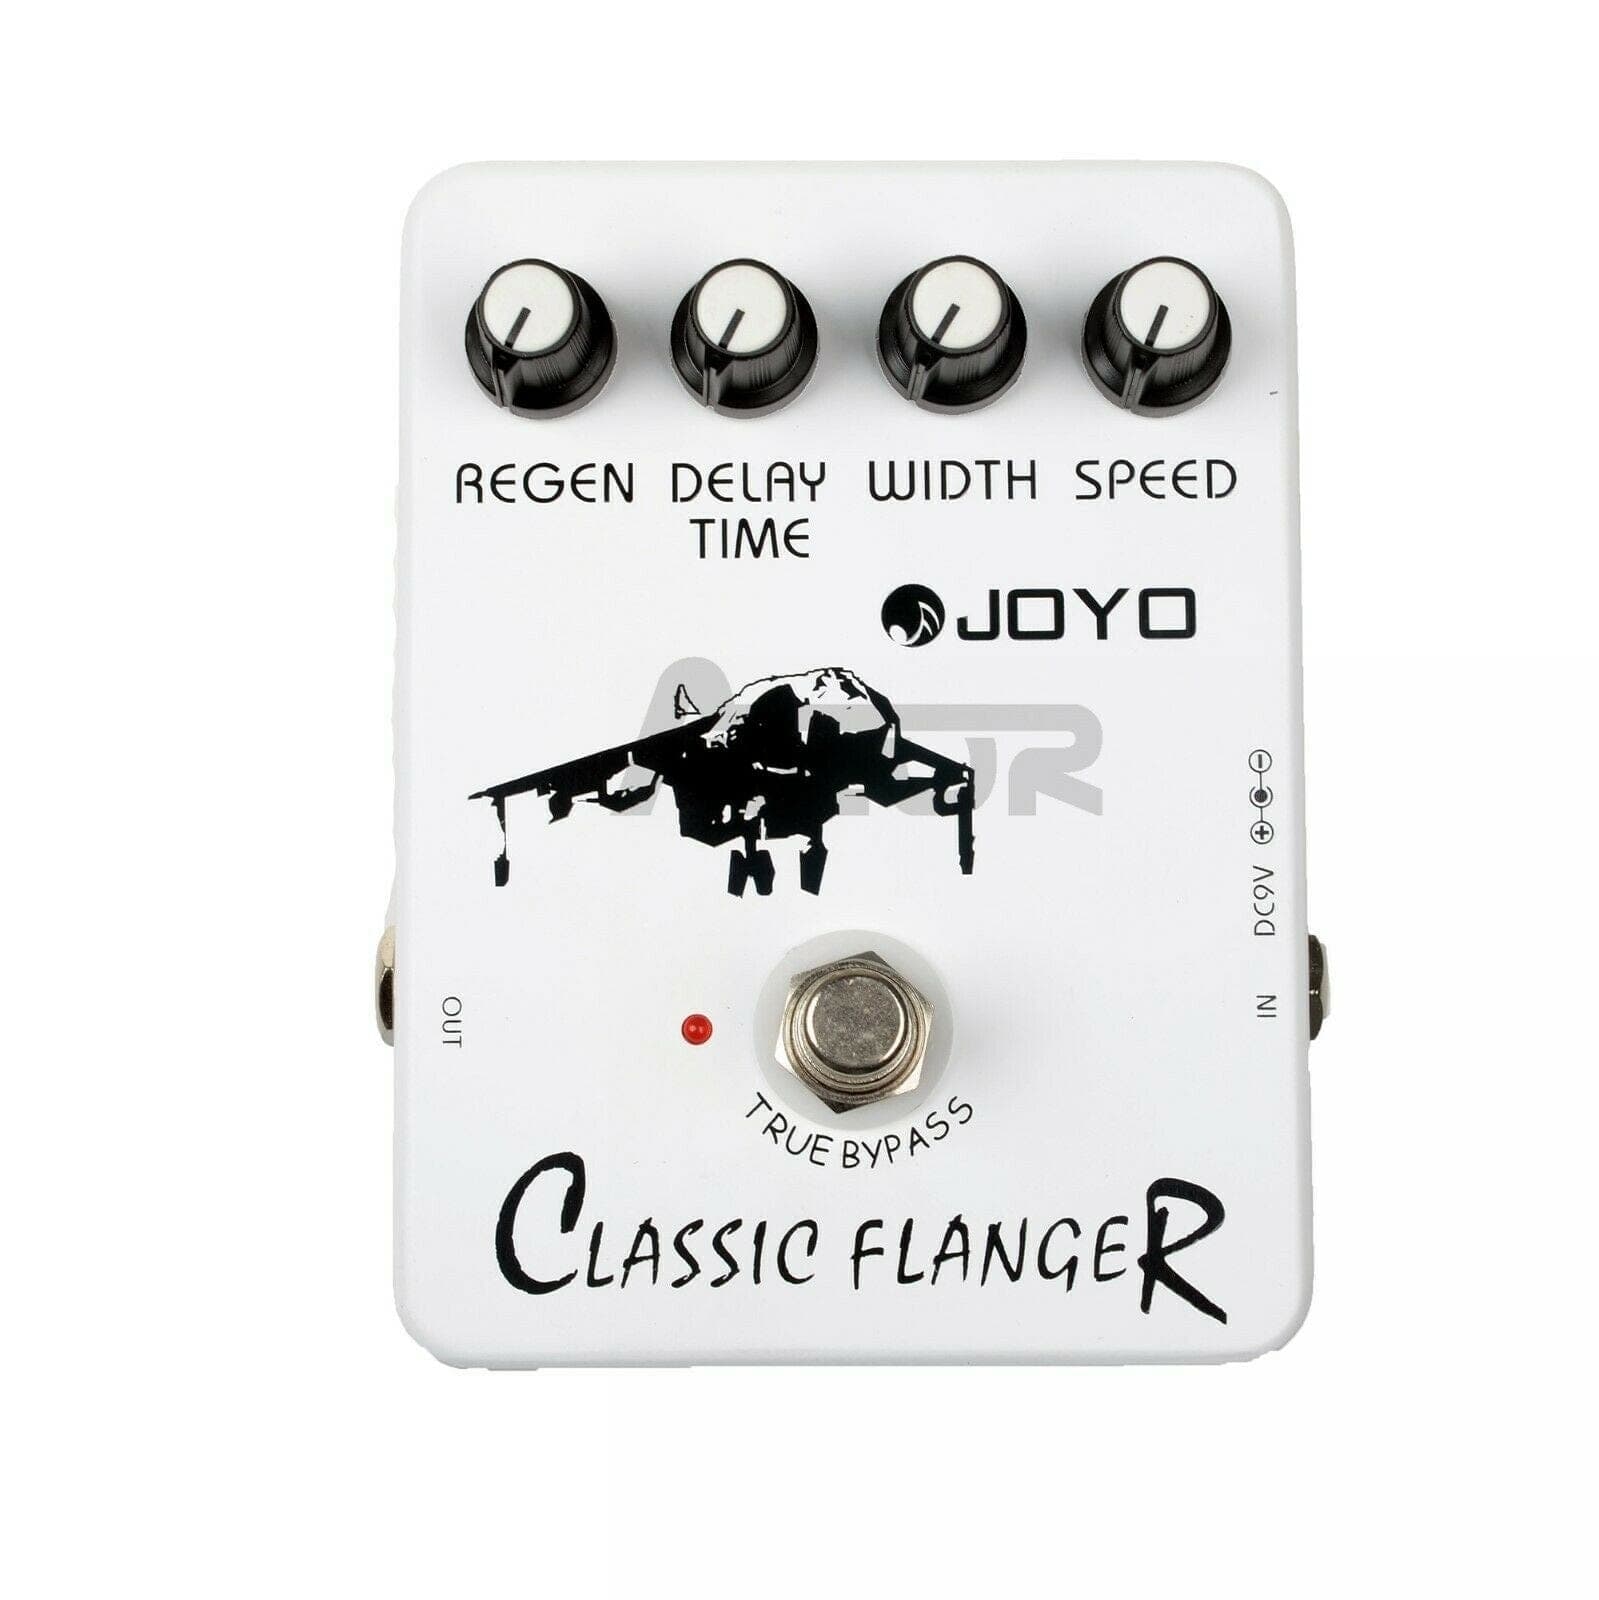 Joyo JF-07 Classic Flanger Guitar Effects Pedal